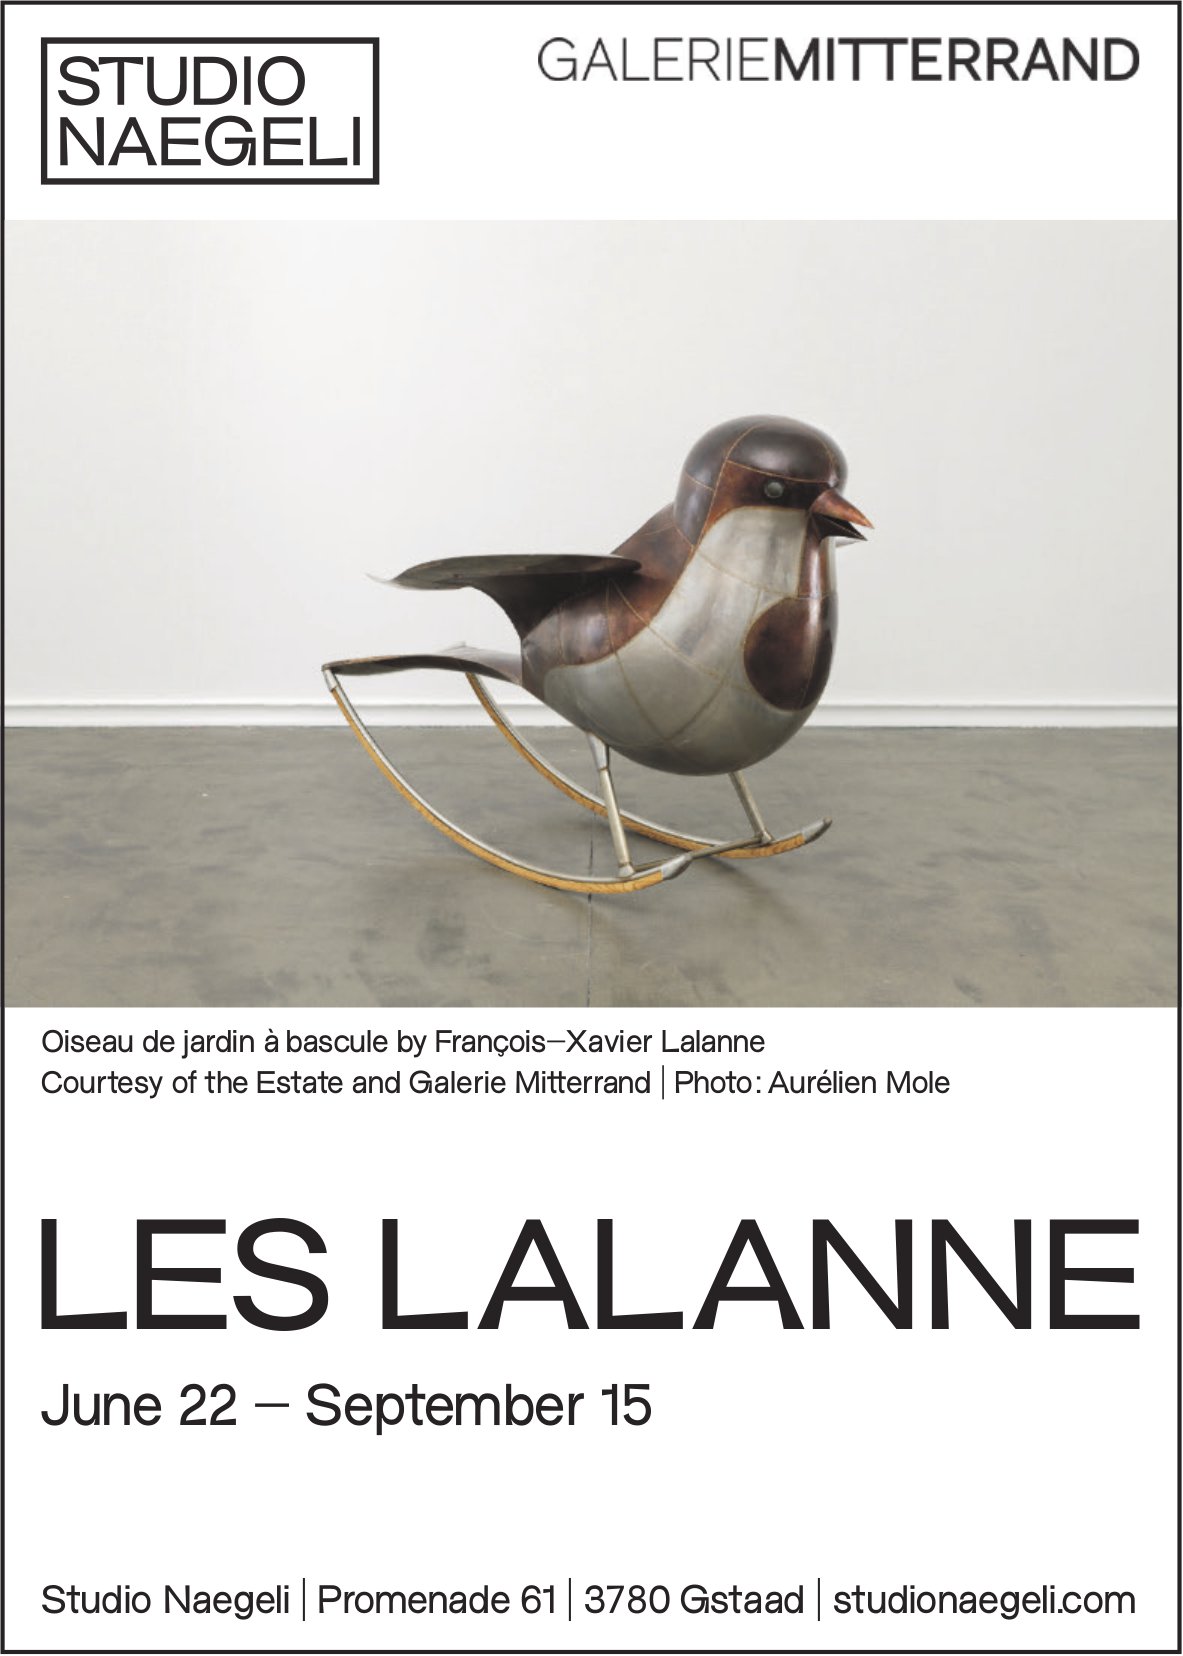 Les Lalanne, 22. Juni - 15. September, Studio Naegeli, Gstaad